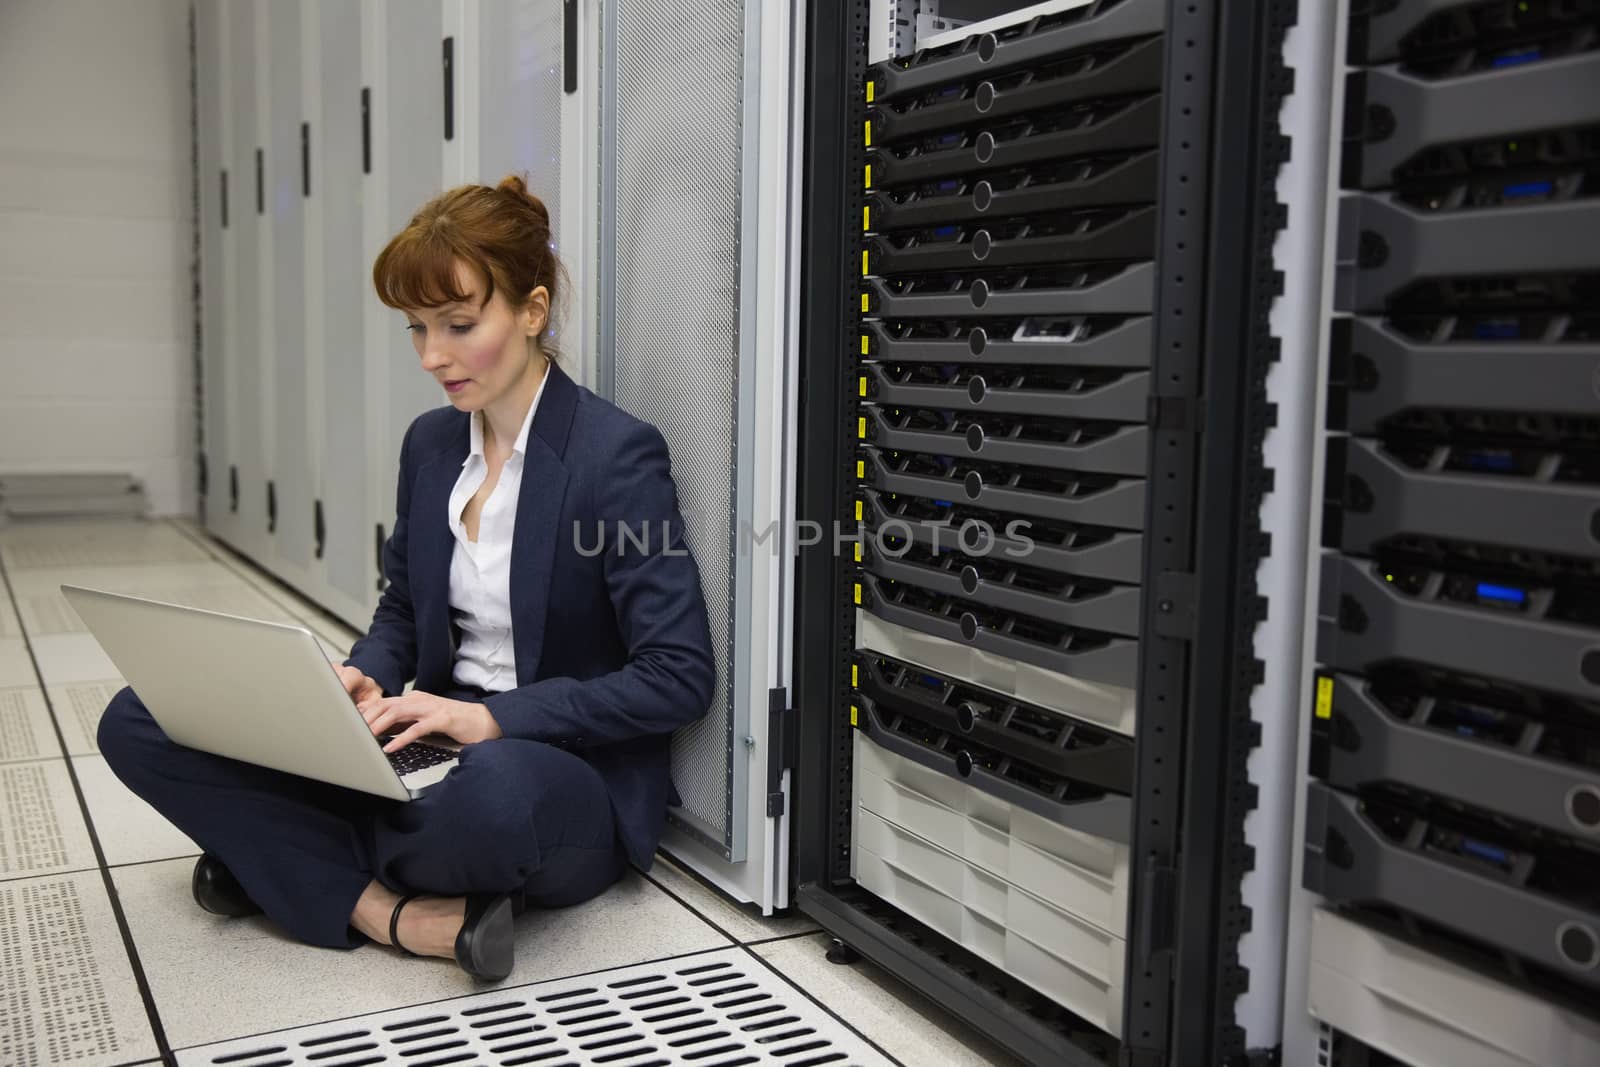 Technician sitting on floor beside server tower using laptop by Wavebreakmedia